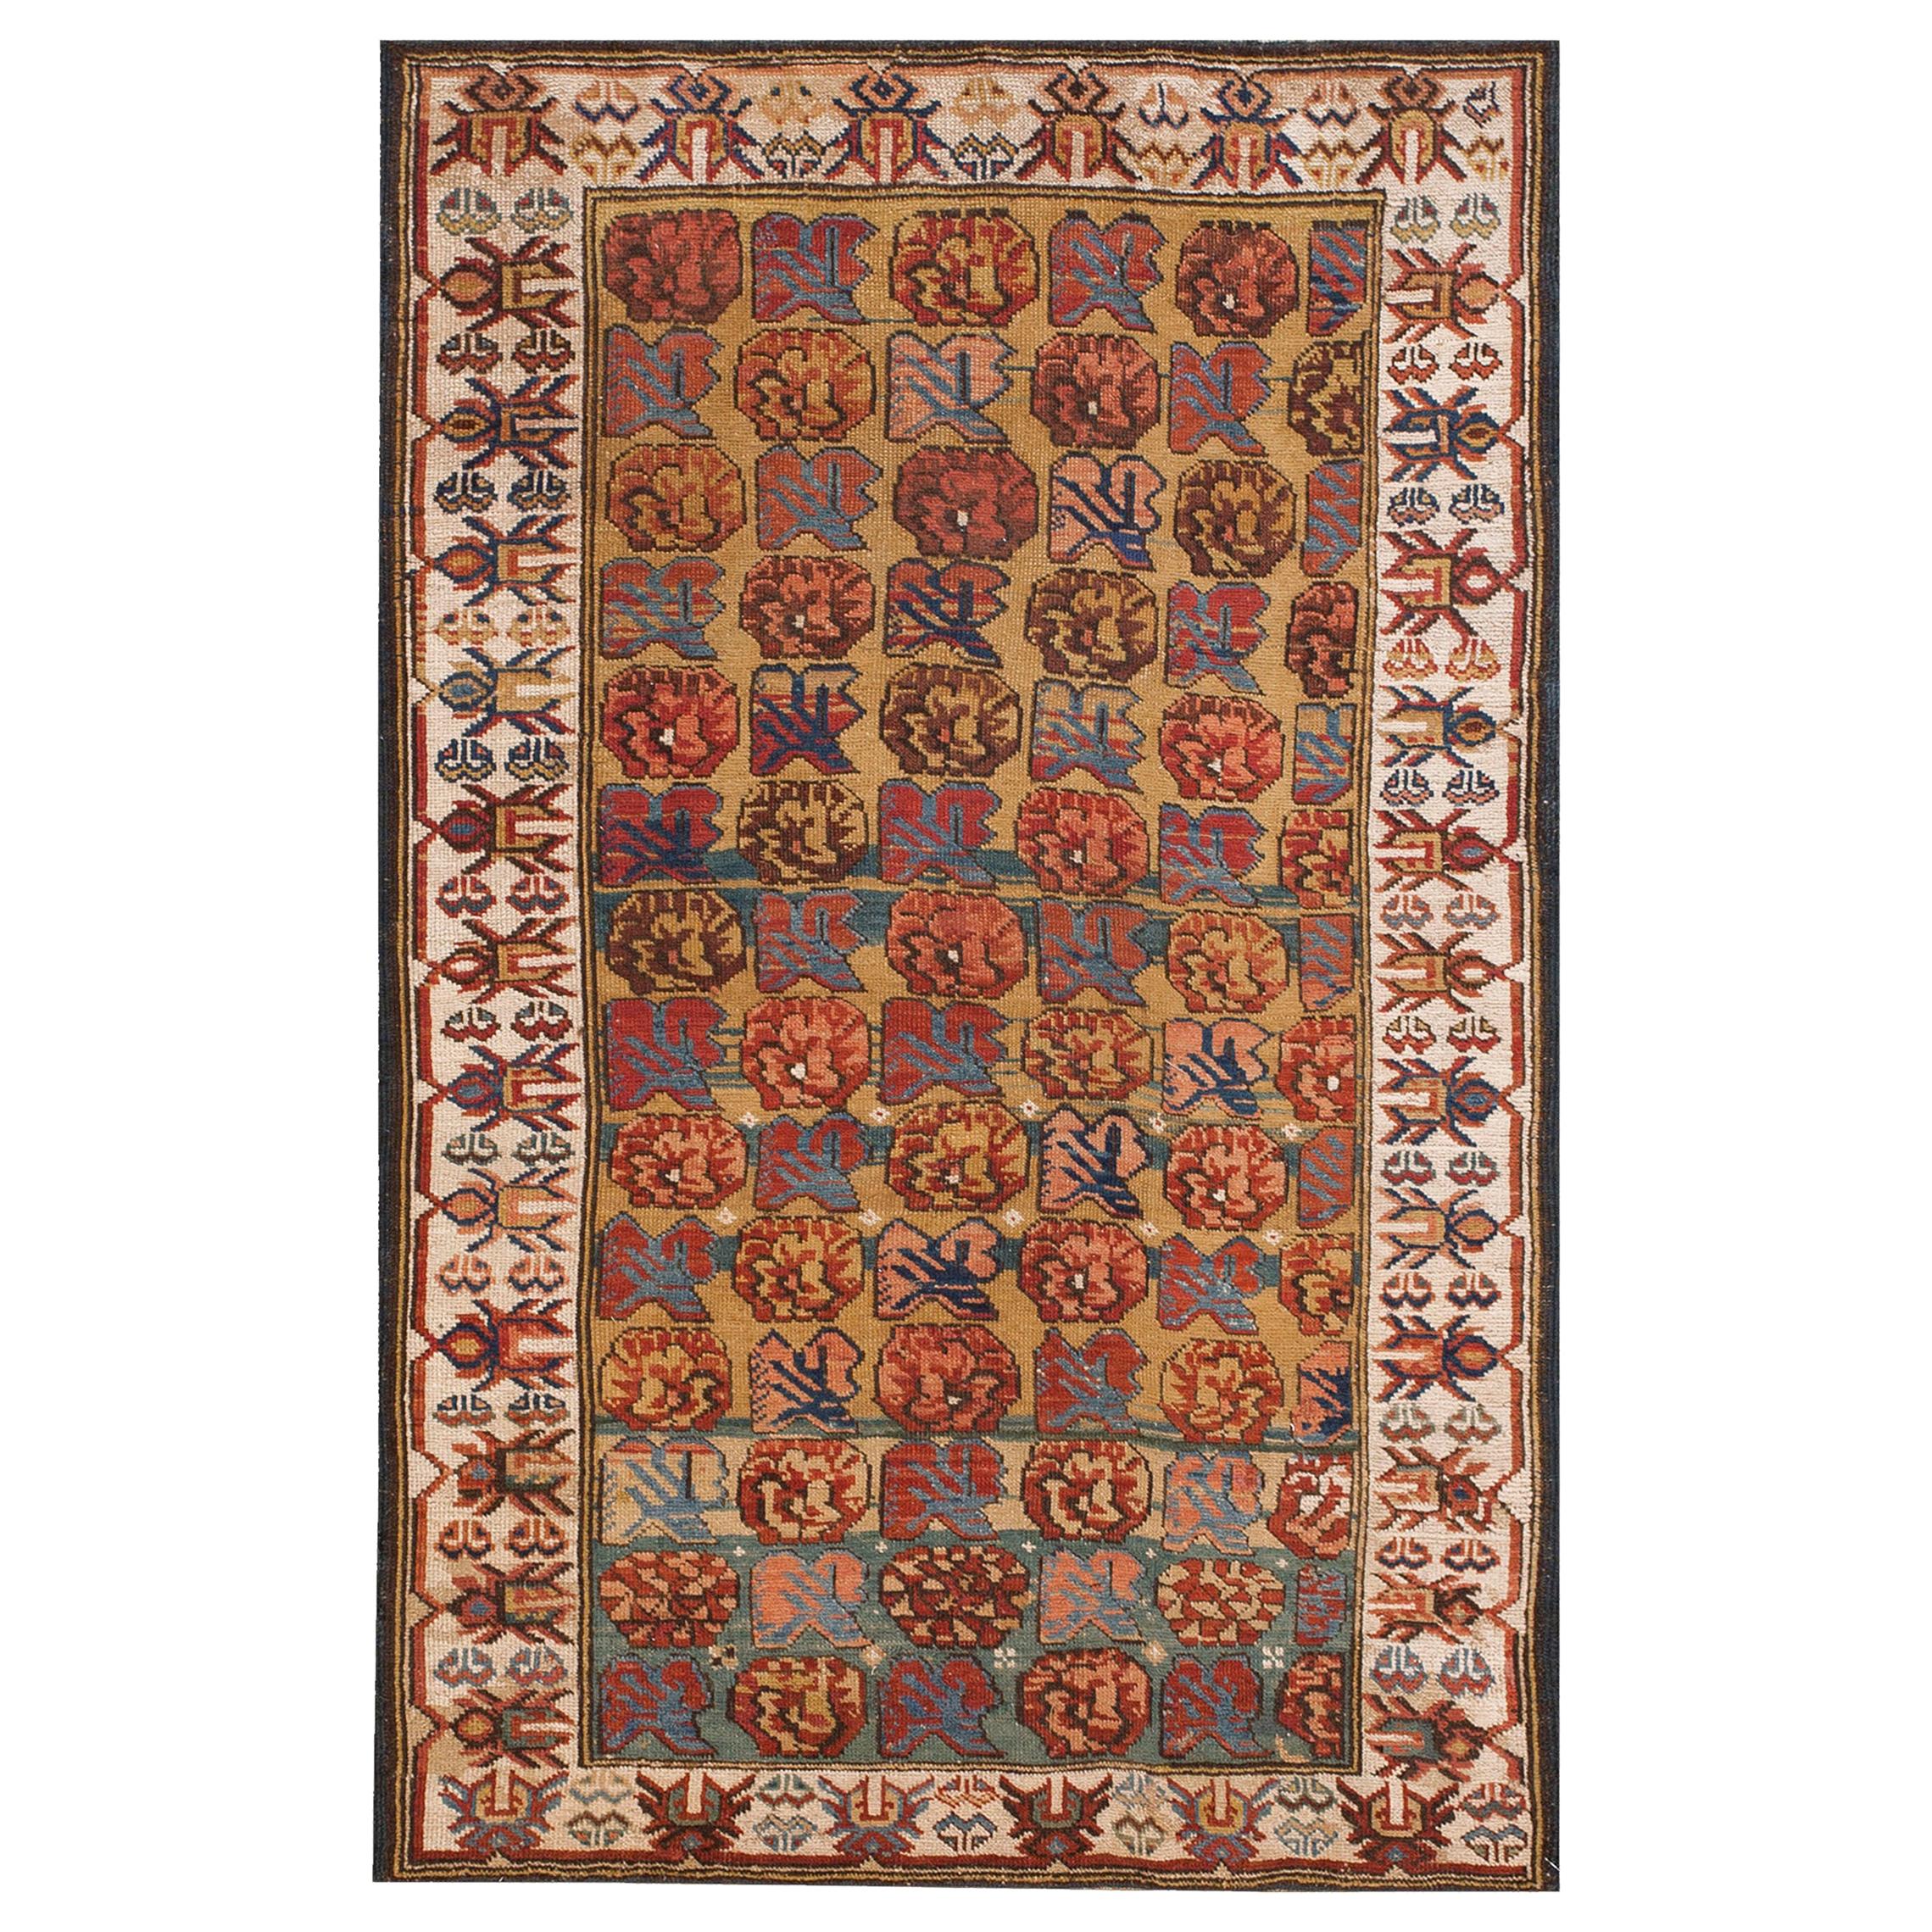 19th Century Caucasian Kuba  Zeichur Carpet ( 3'3" x 5' - 99 x 152 )